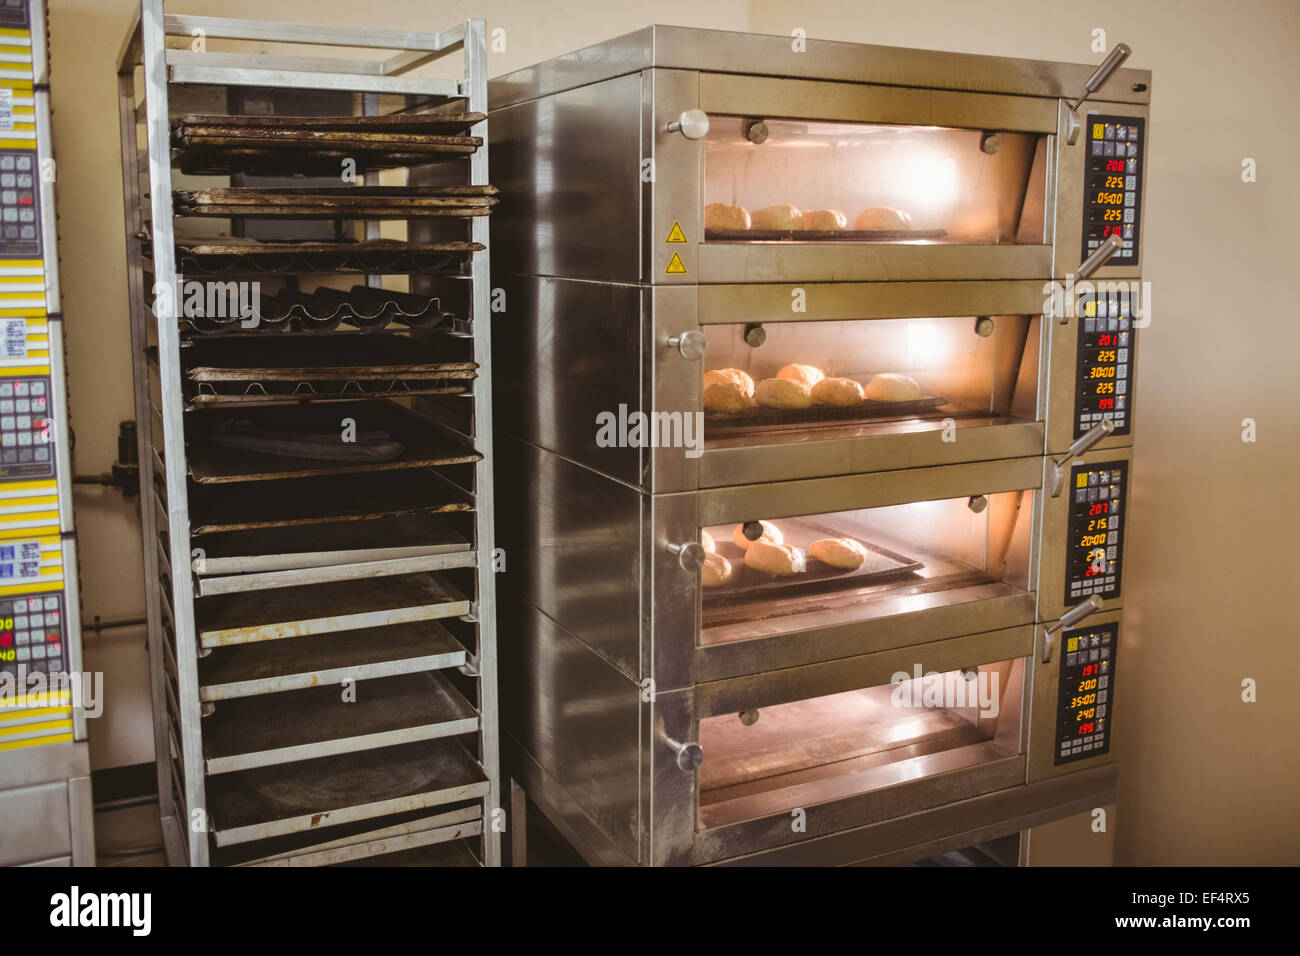 Bread/Bun Commercial Bakery Oven